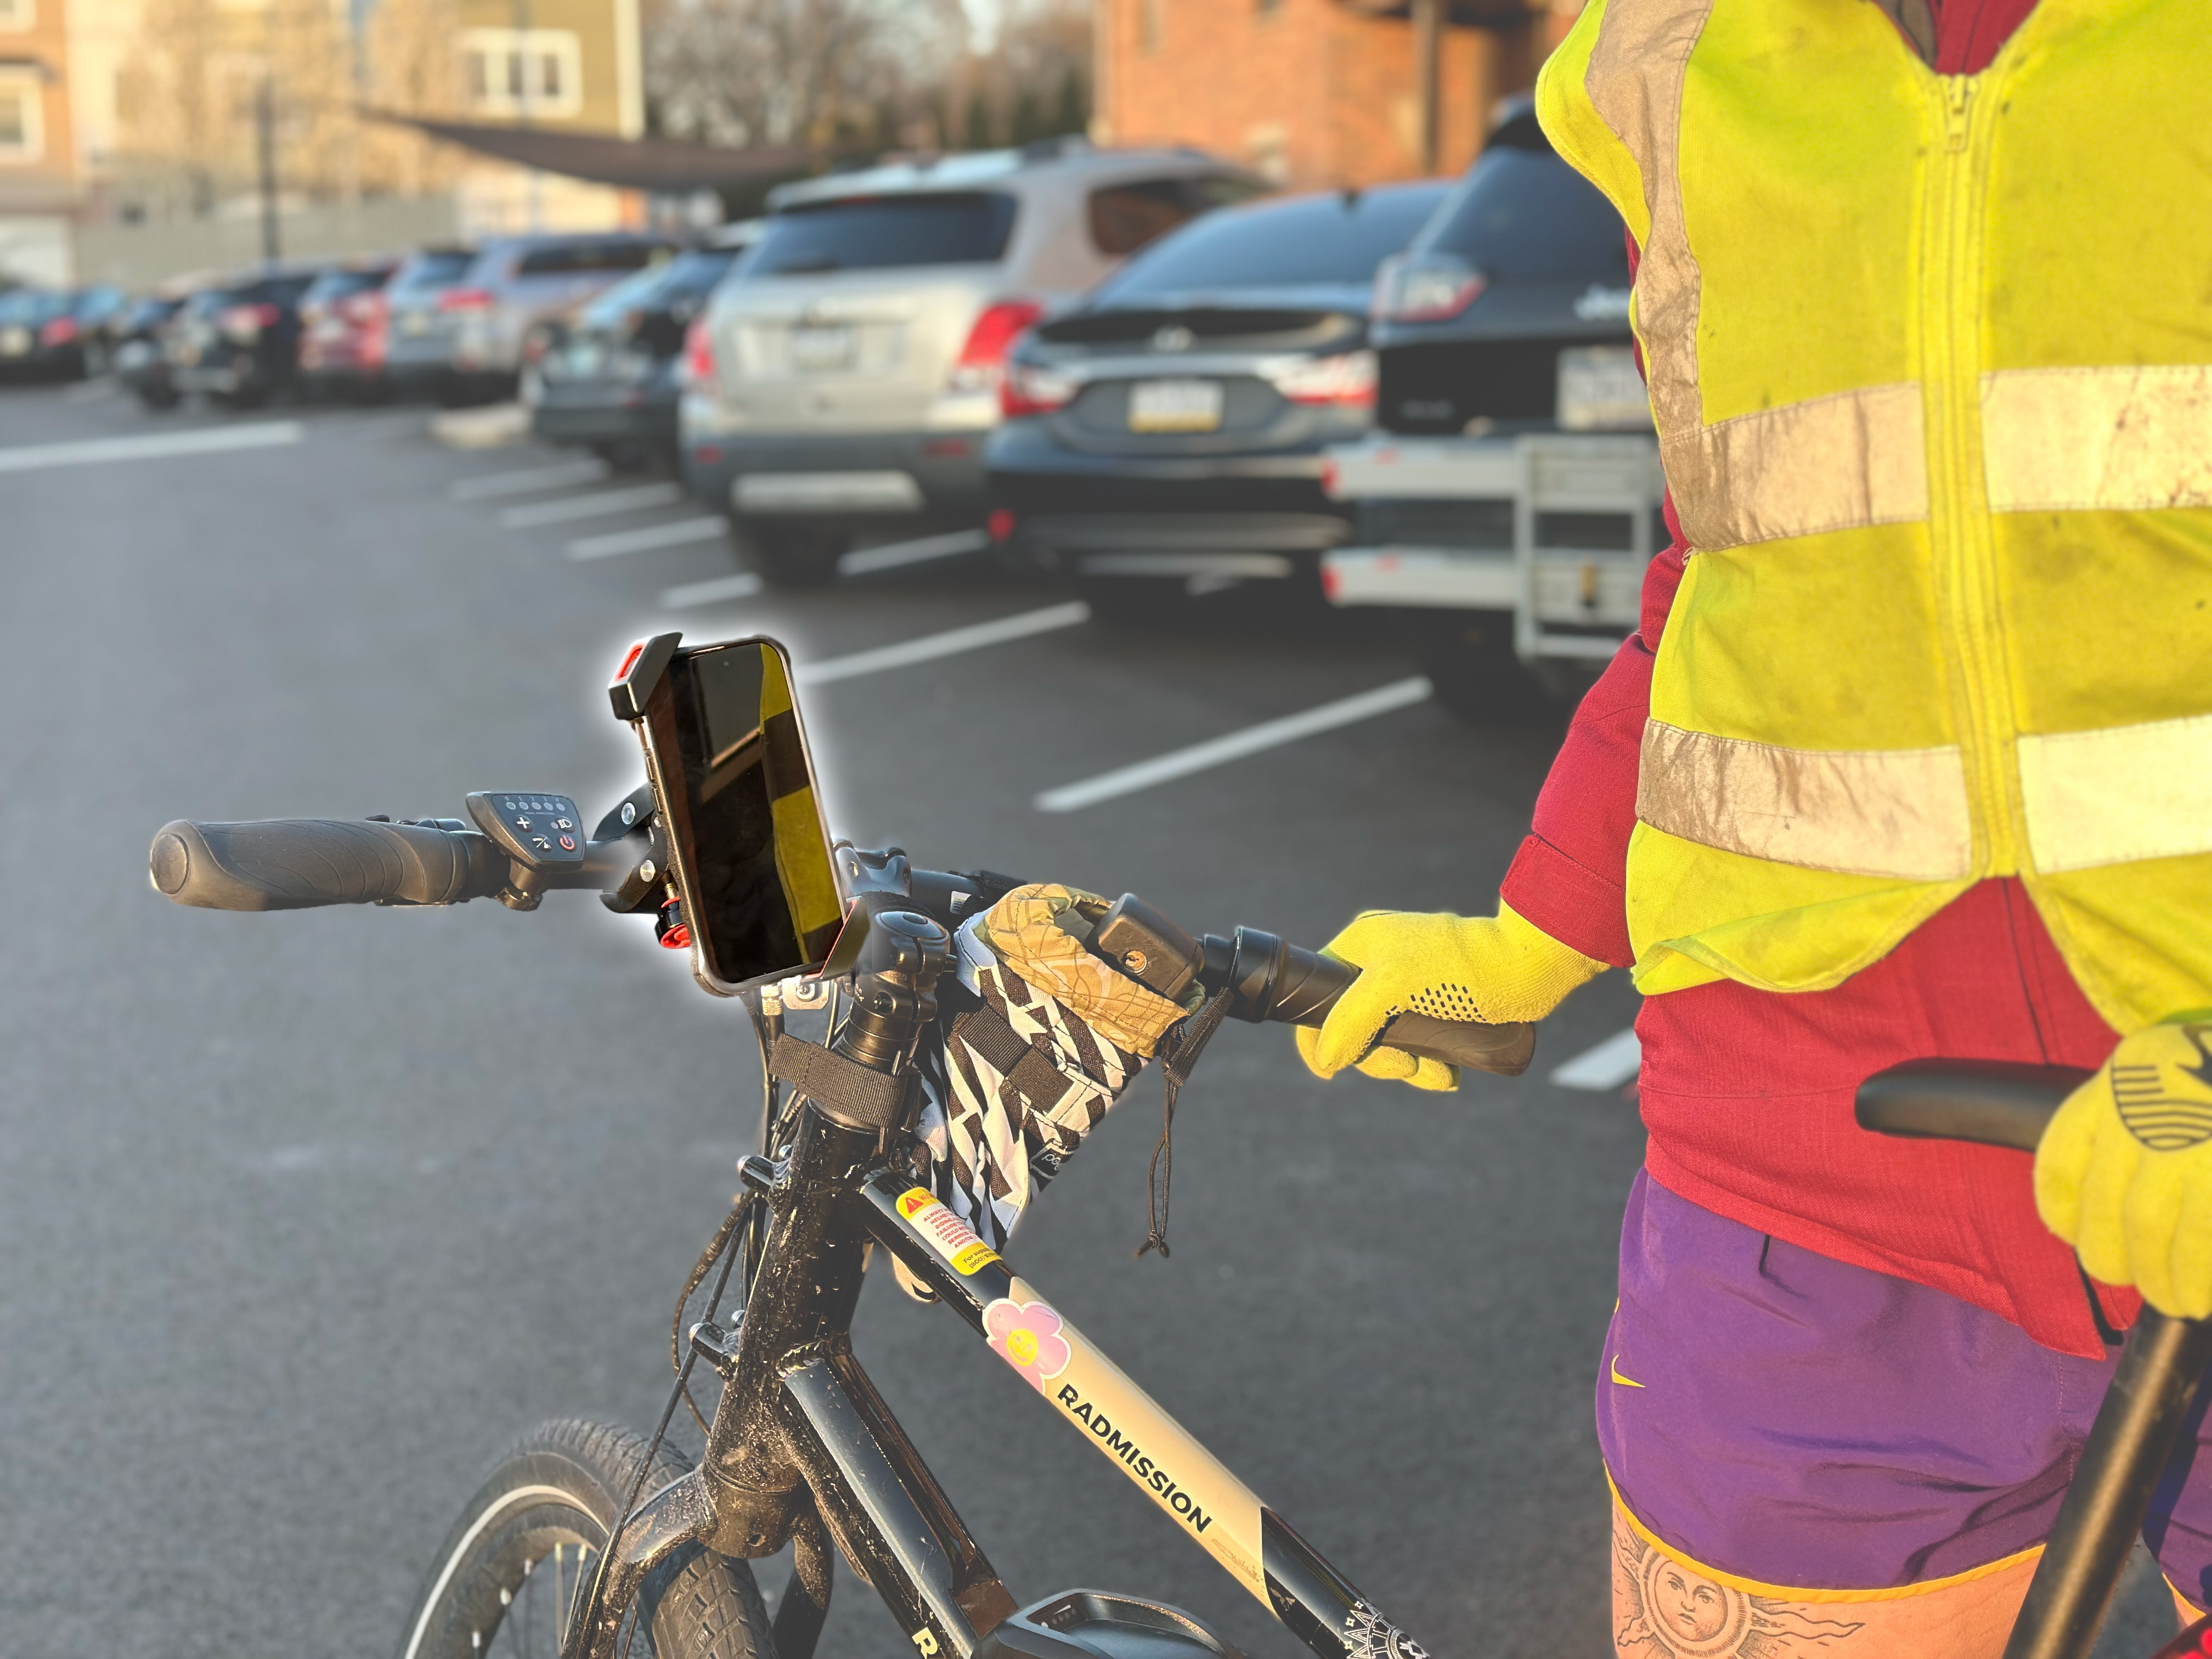 A phone mounted on bicycle handlebars